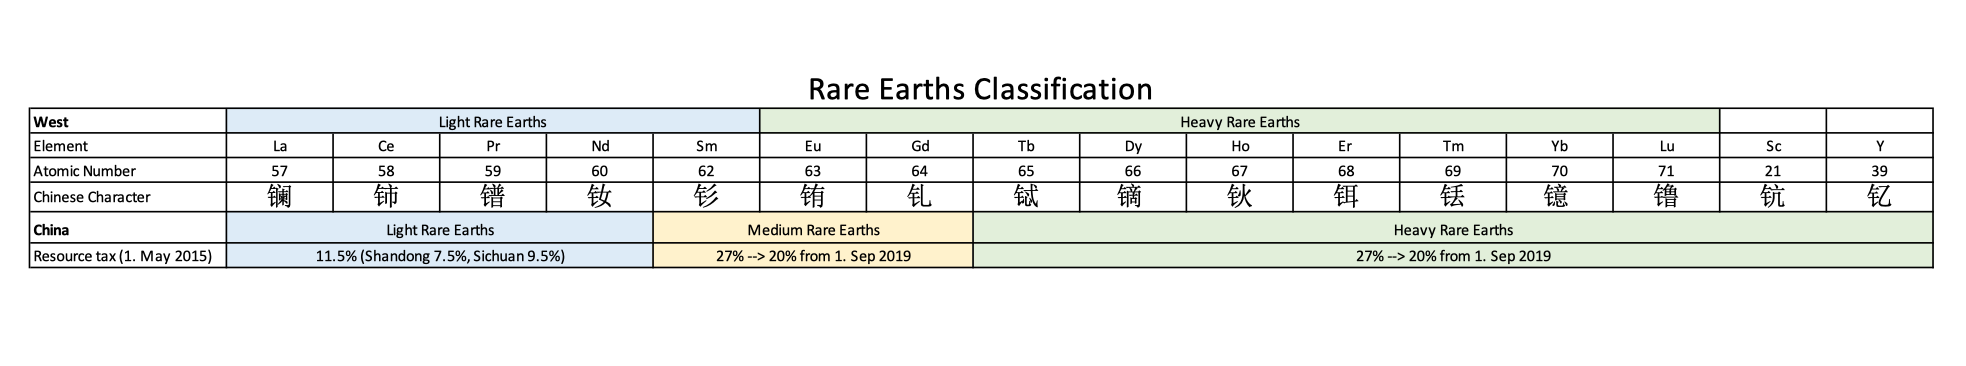 Rare_earths_classification